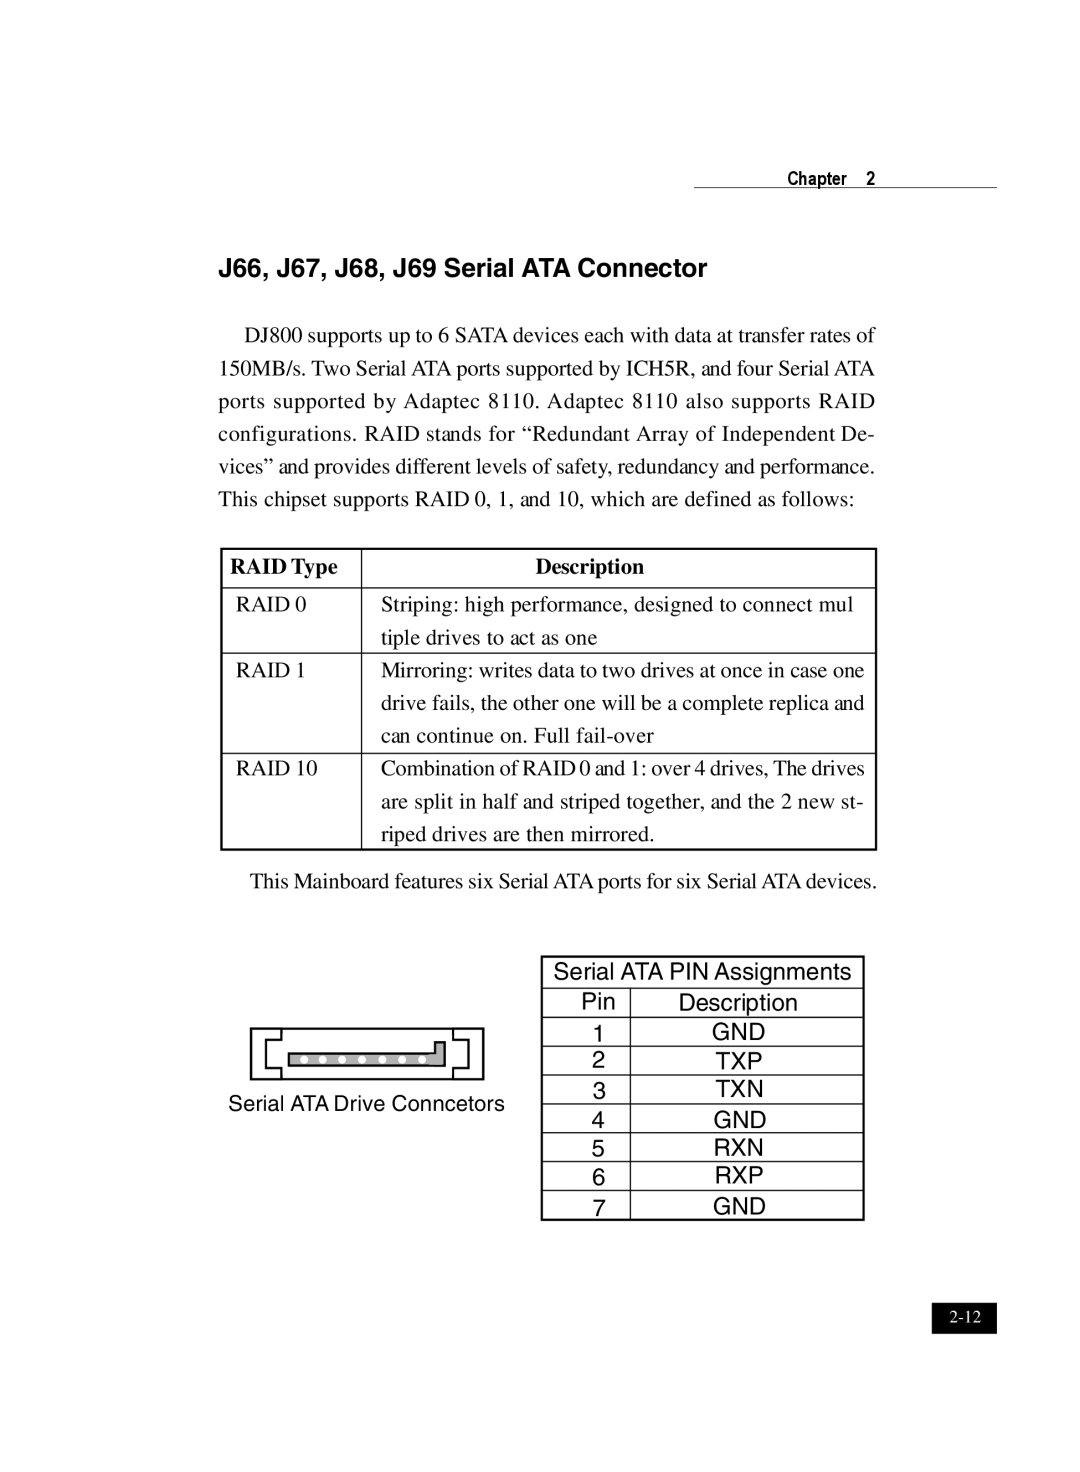 IBM DJ800 J66, J67, J68, J69 Serial ATA Connector, Serial ATA PIN Assignments, GND 2 TXP 3 TXN 4 GND 5 RXN 6 RXP 7 GND 